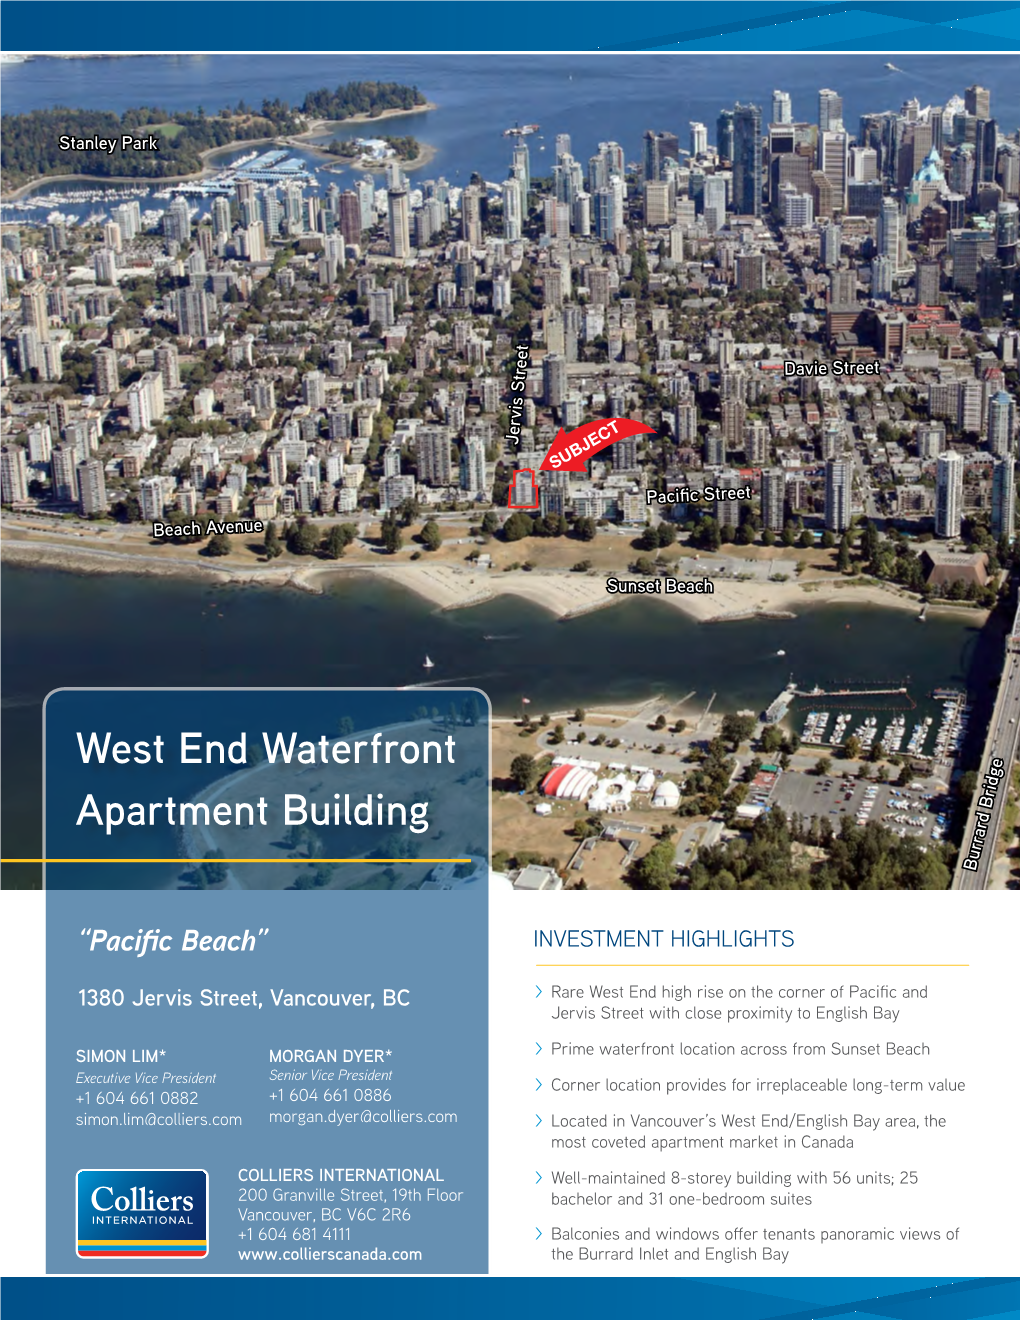 West End Waterfront Apartment Building